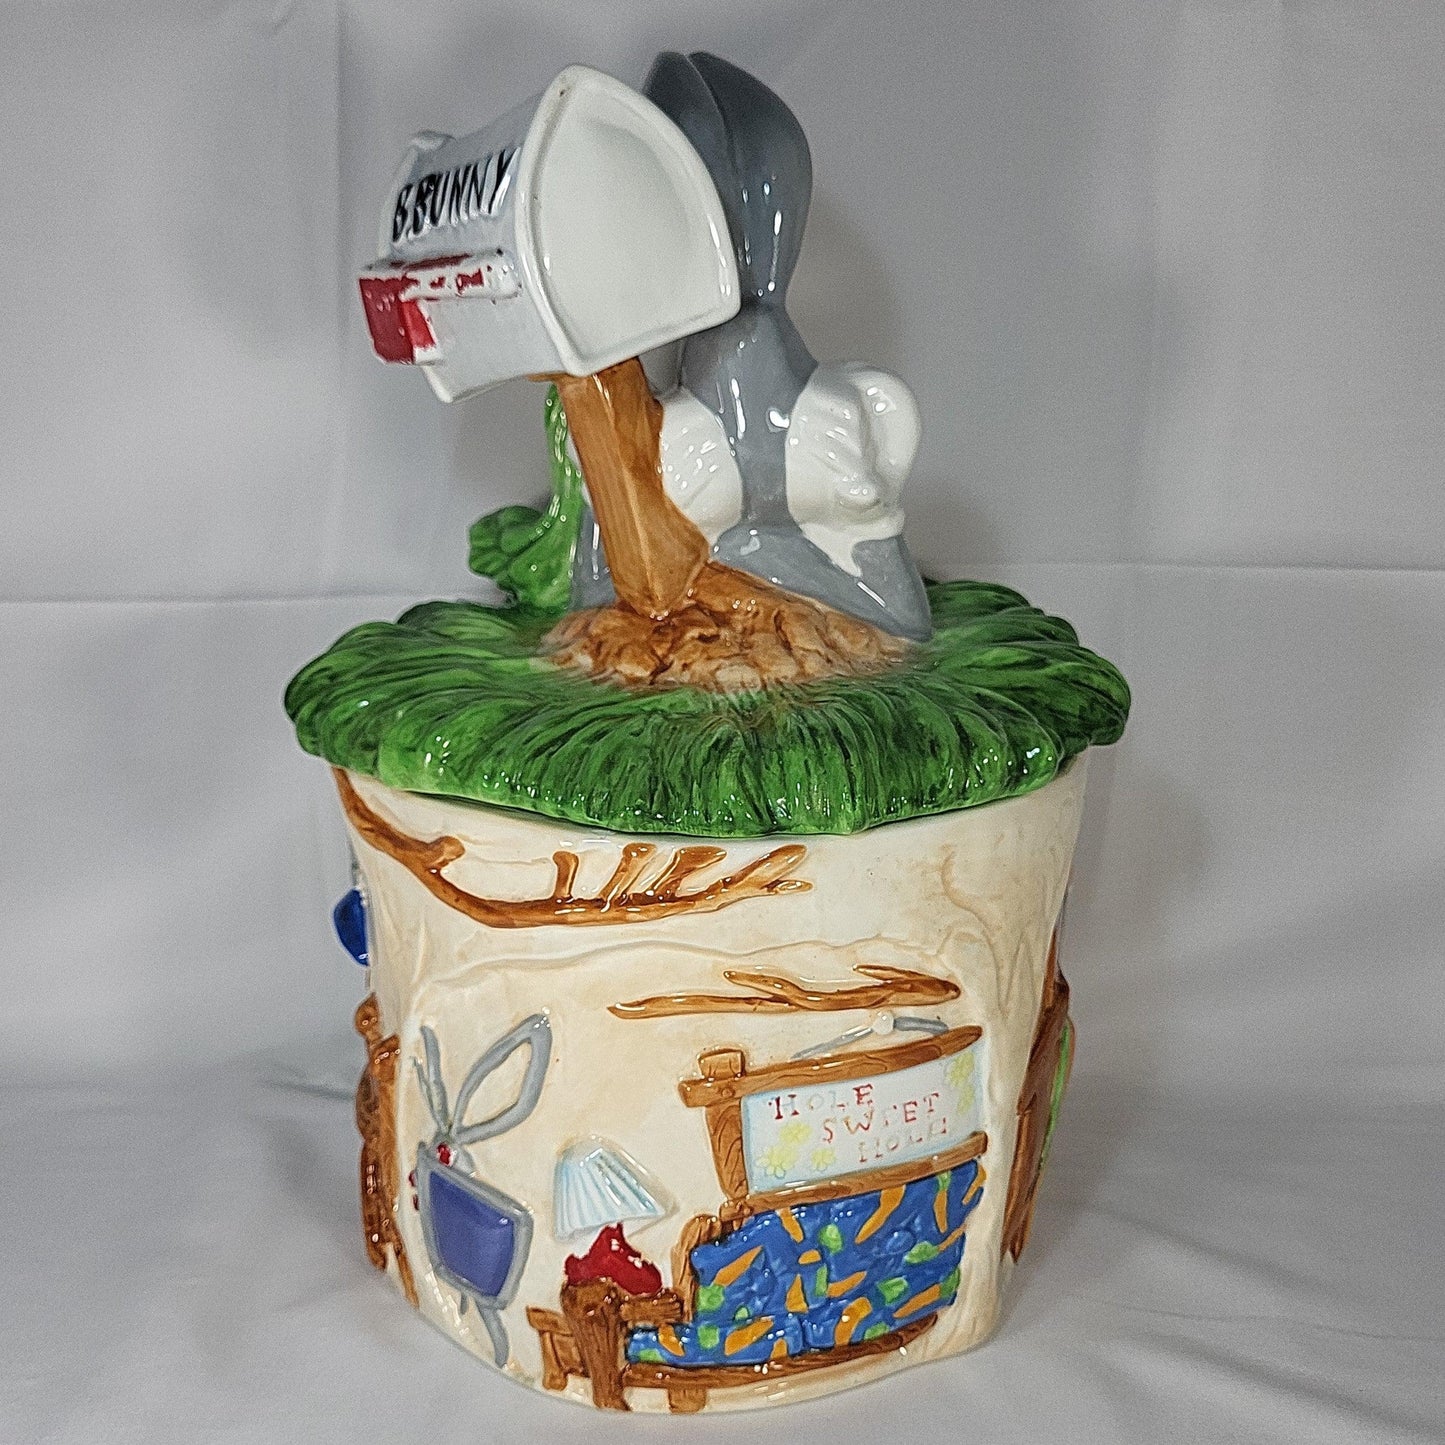 1996 Warner Bros Bugs Bunny "Hole Sweet Hole" Cookie Jar